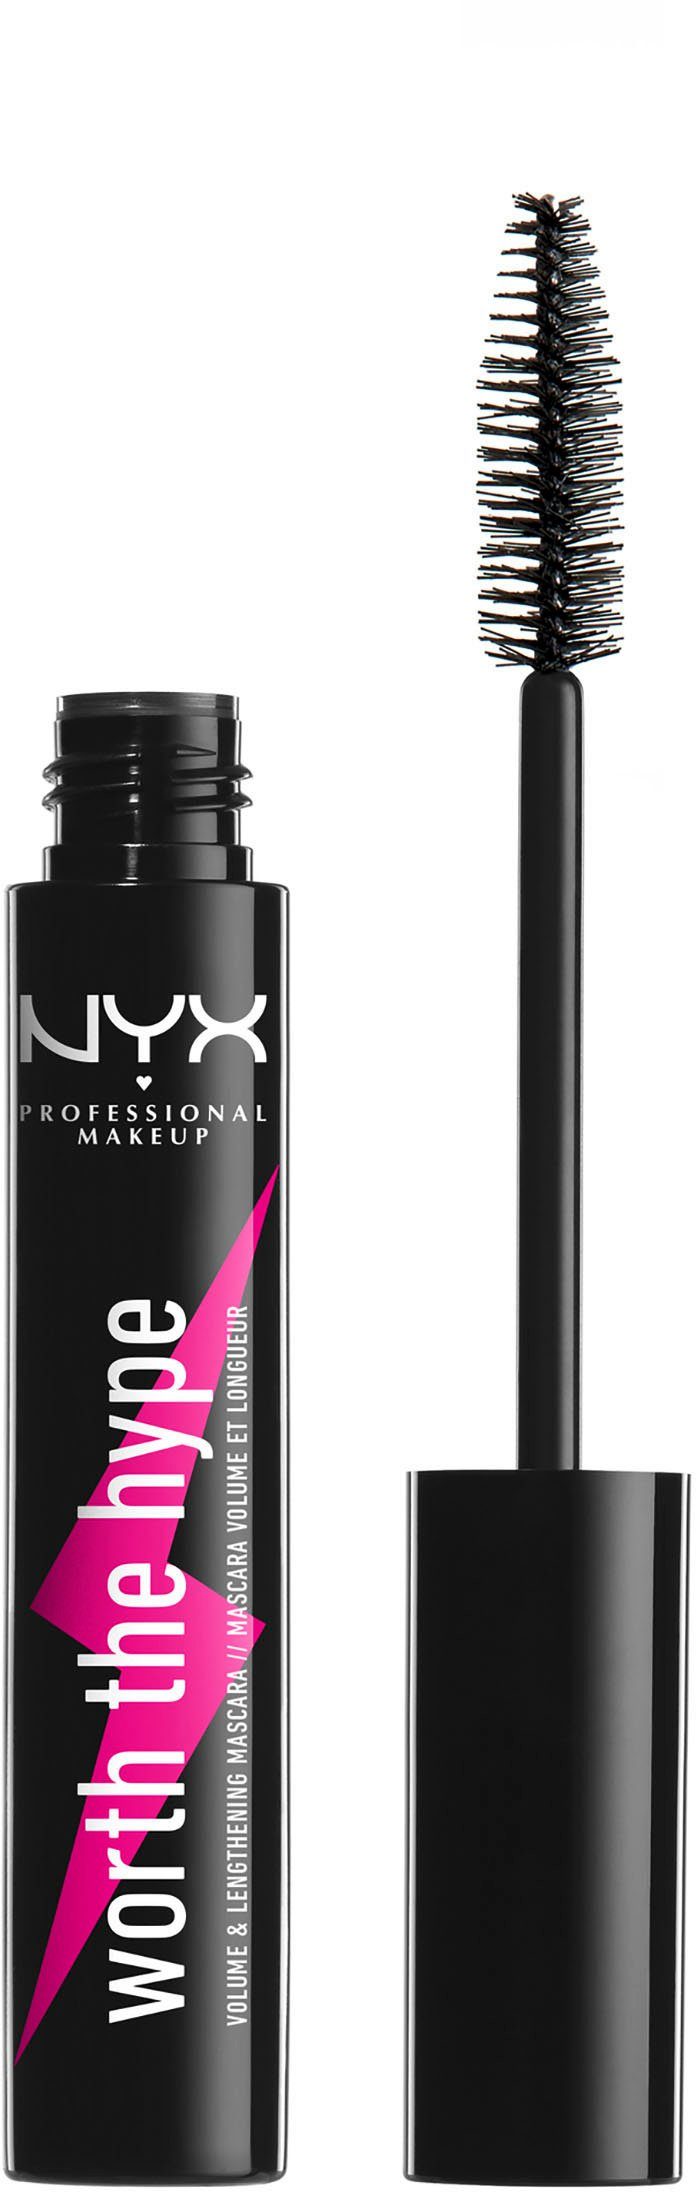 NYX Mascara Makeup Professional Worth The Hype Mascara